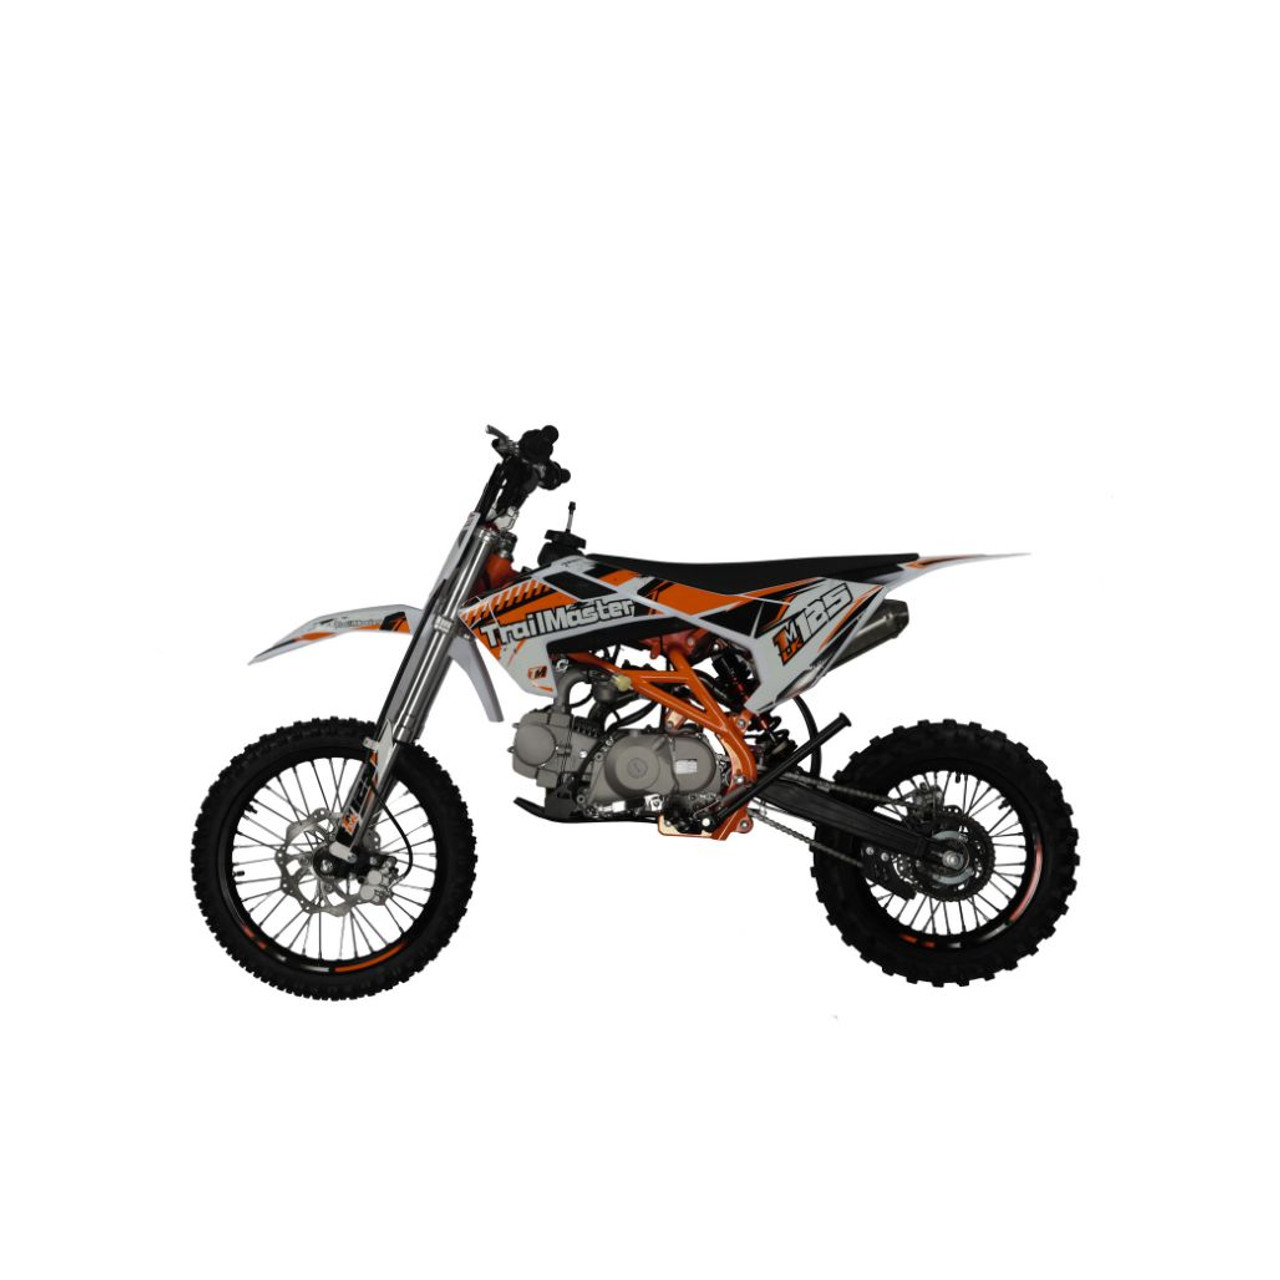 TrailMaster 125cc Dirt Bike, LK125 Electric Start (17/14) (TM-LK125)